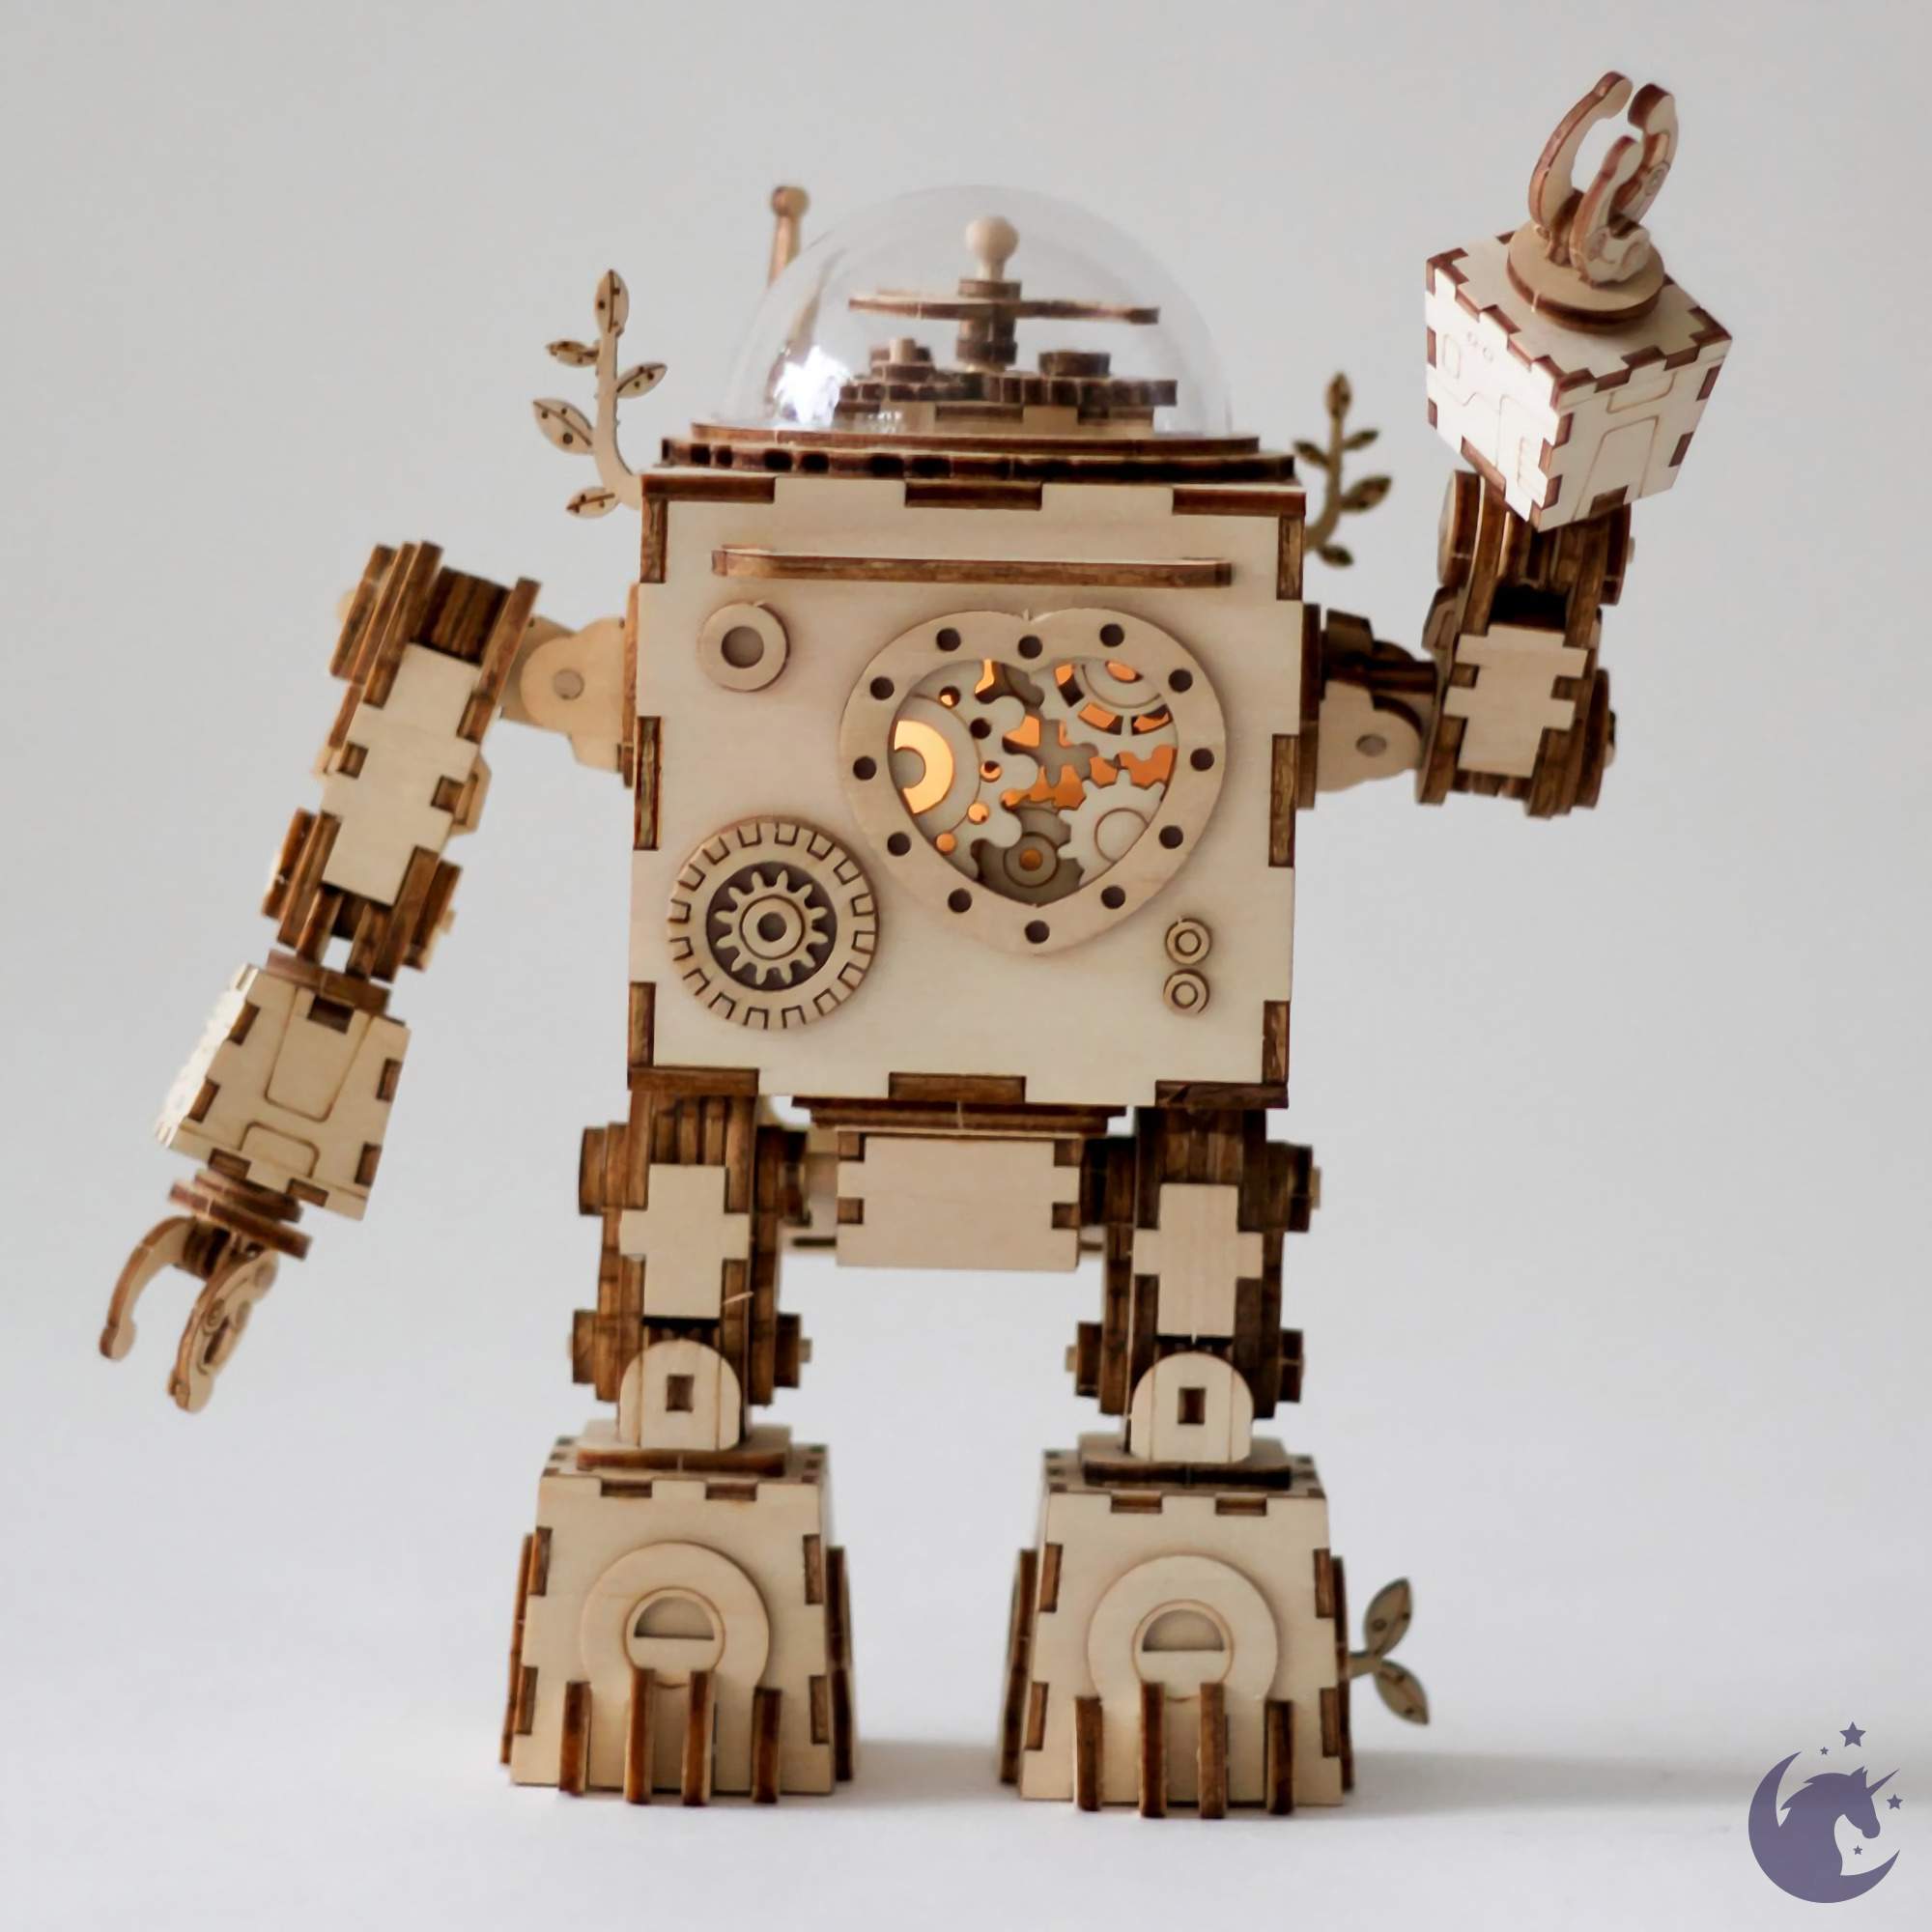 Orpheus Robot - The Saddest Music Machine Got it as a gift and